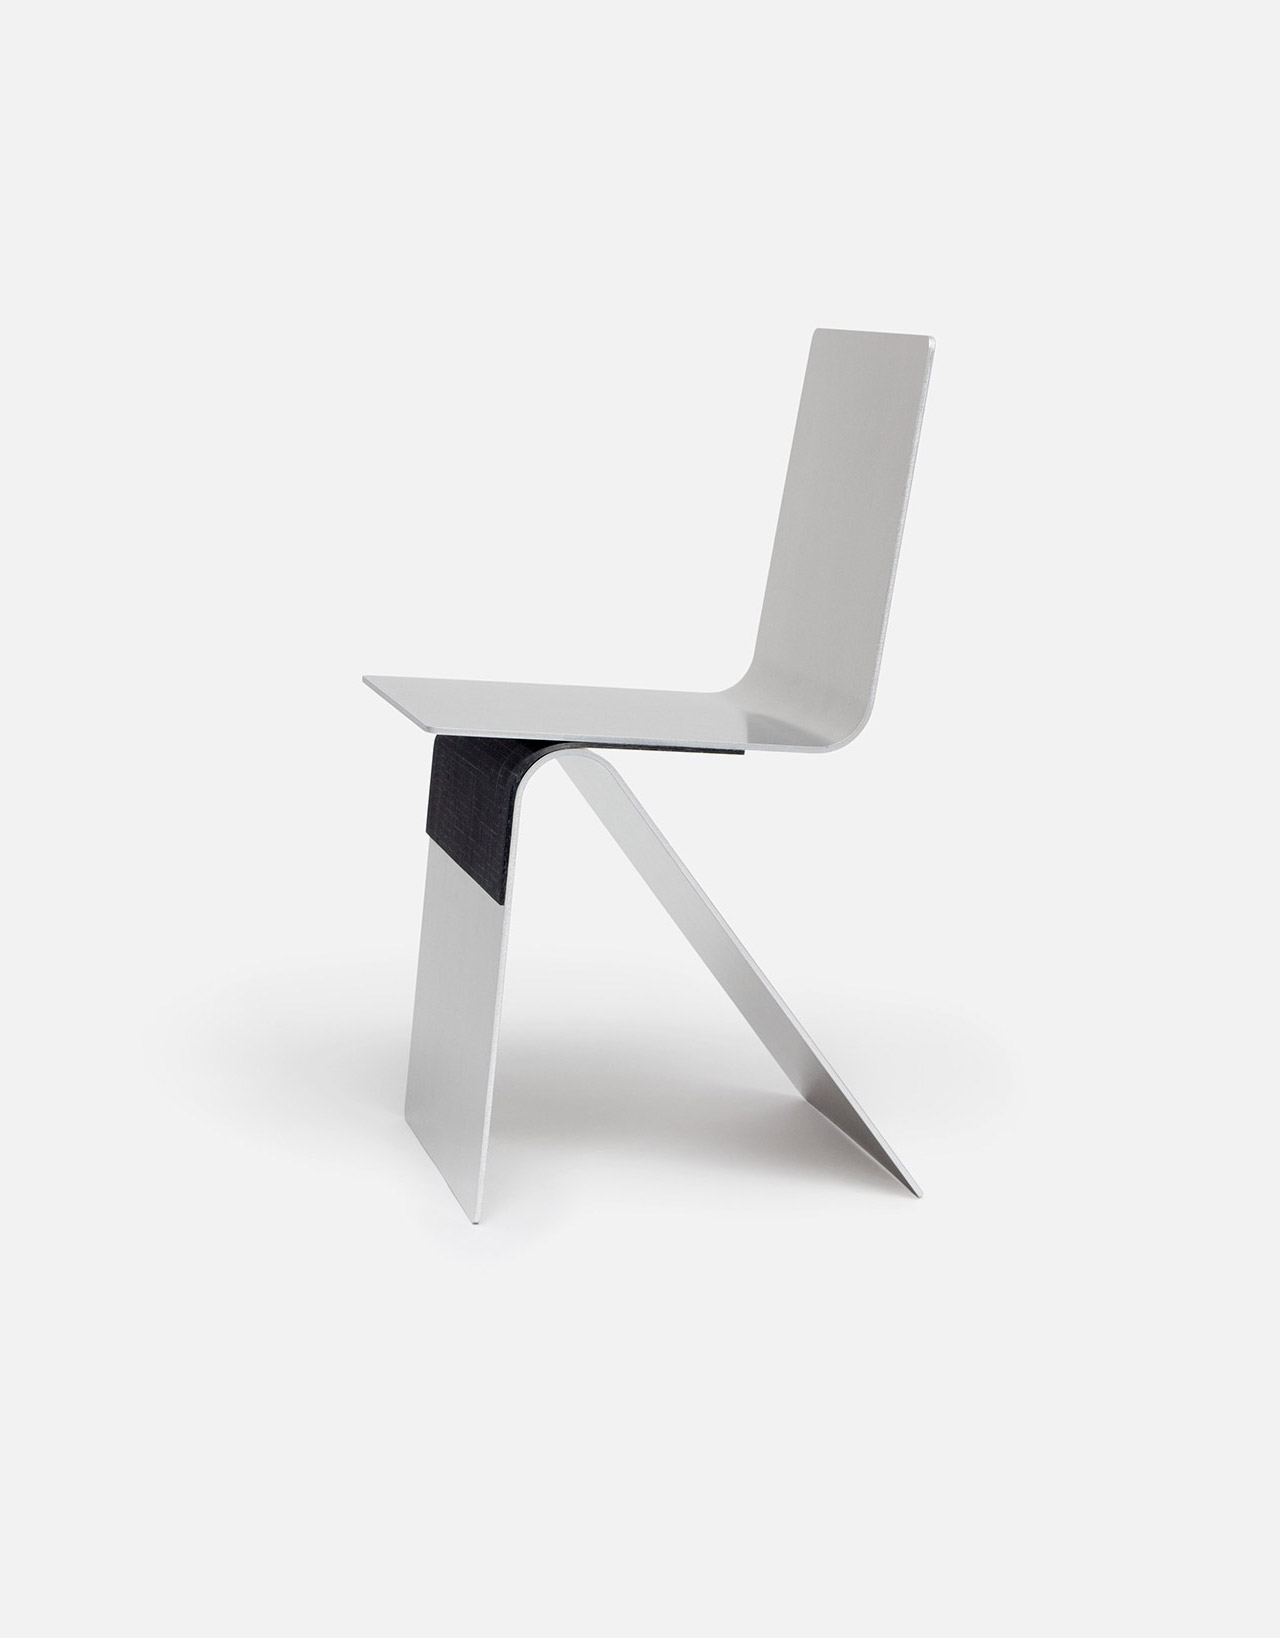 Minimalist Aluminium Chair by Leon Ransmeier | Aesence